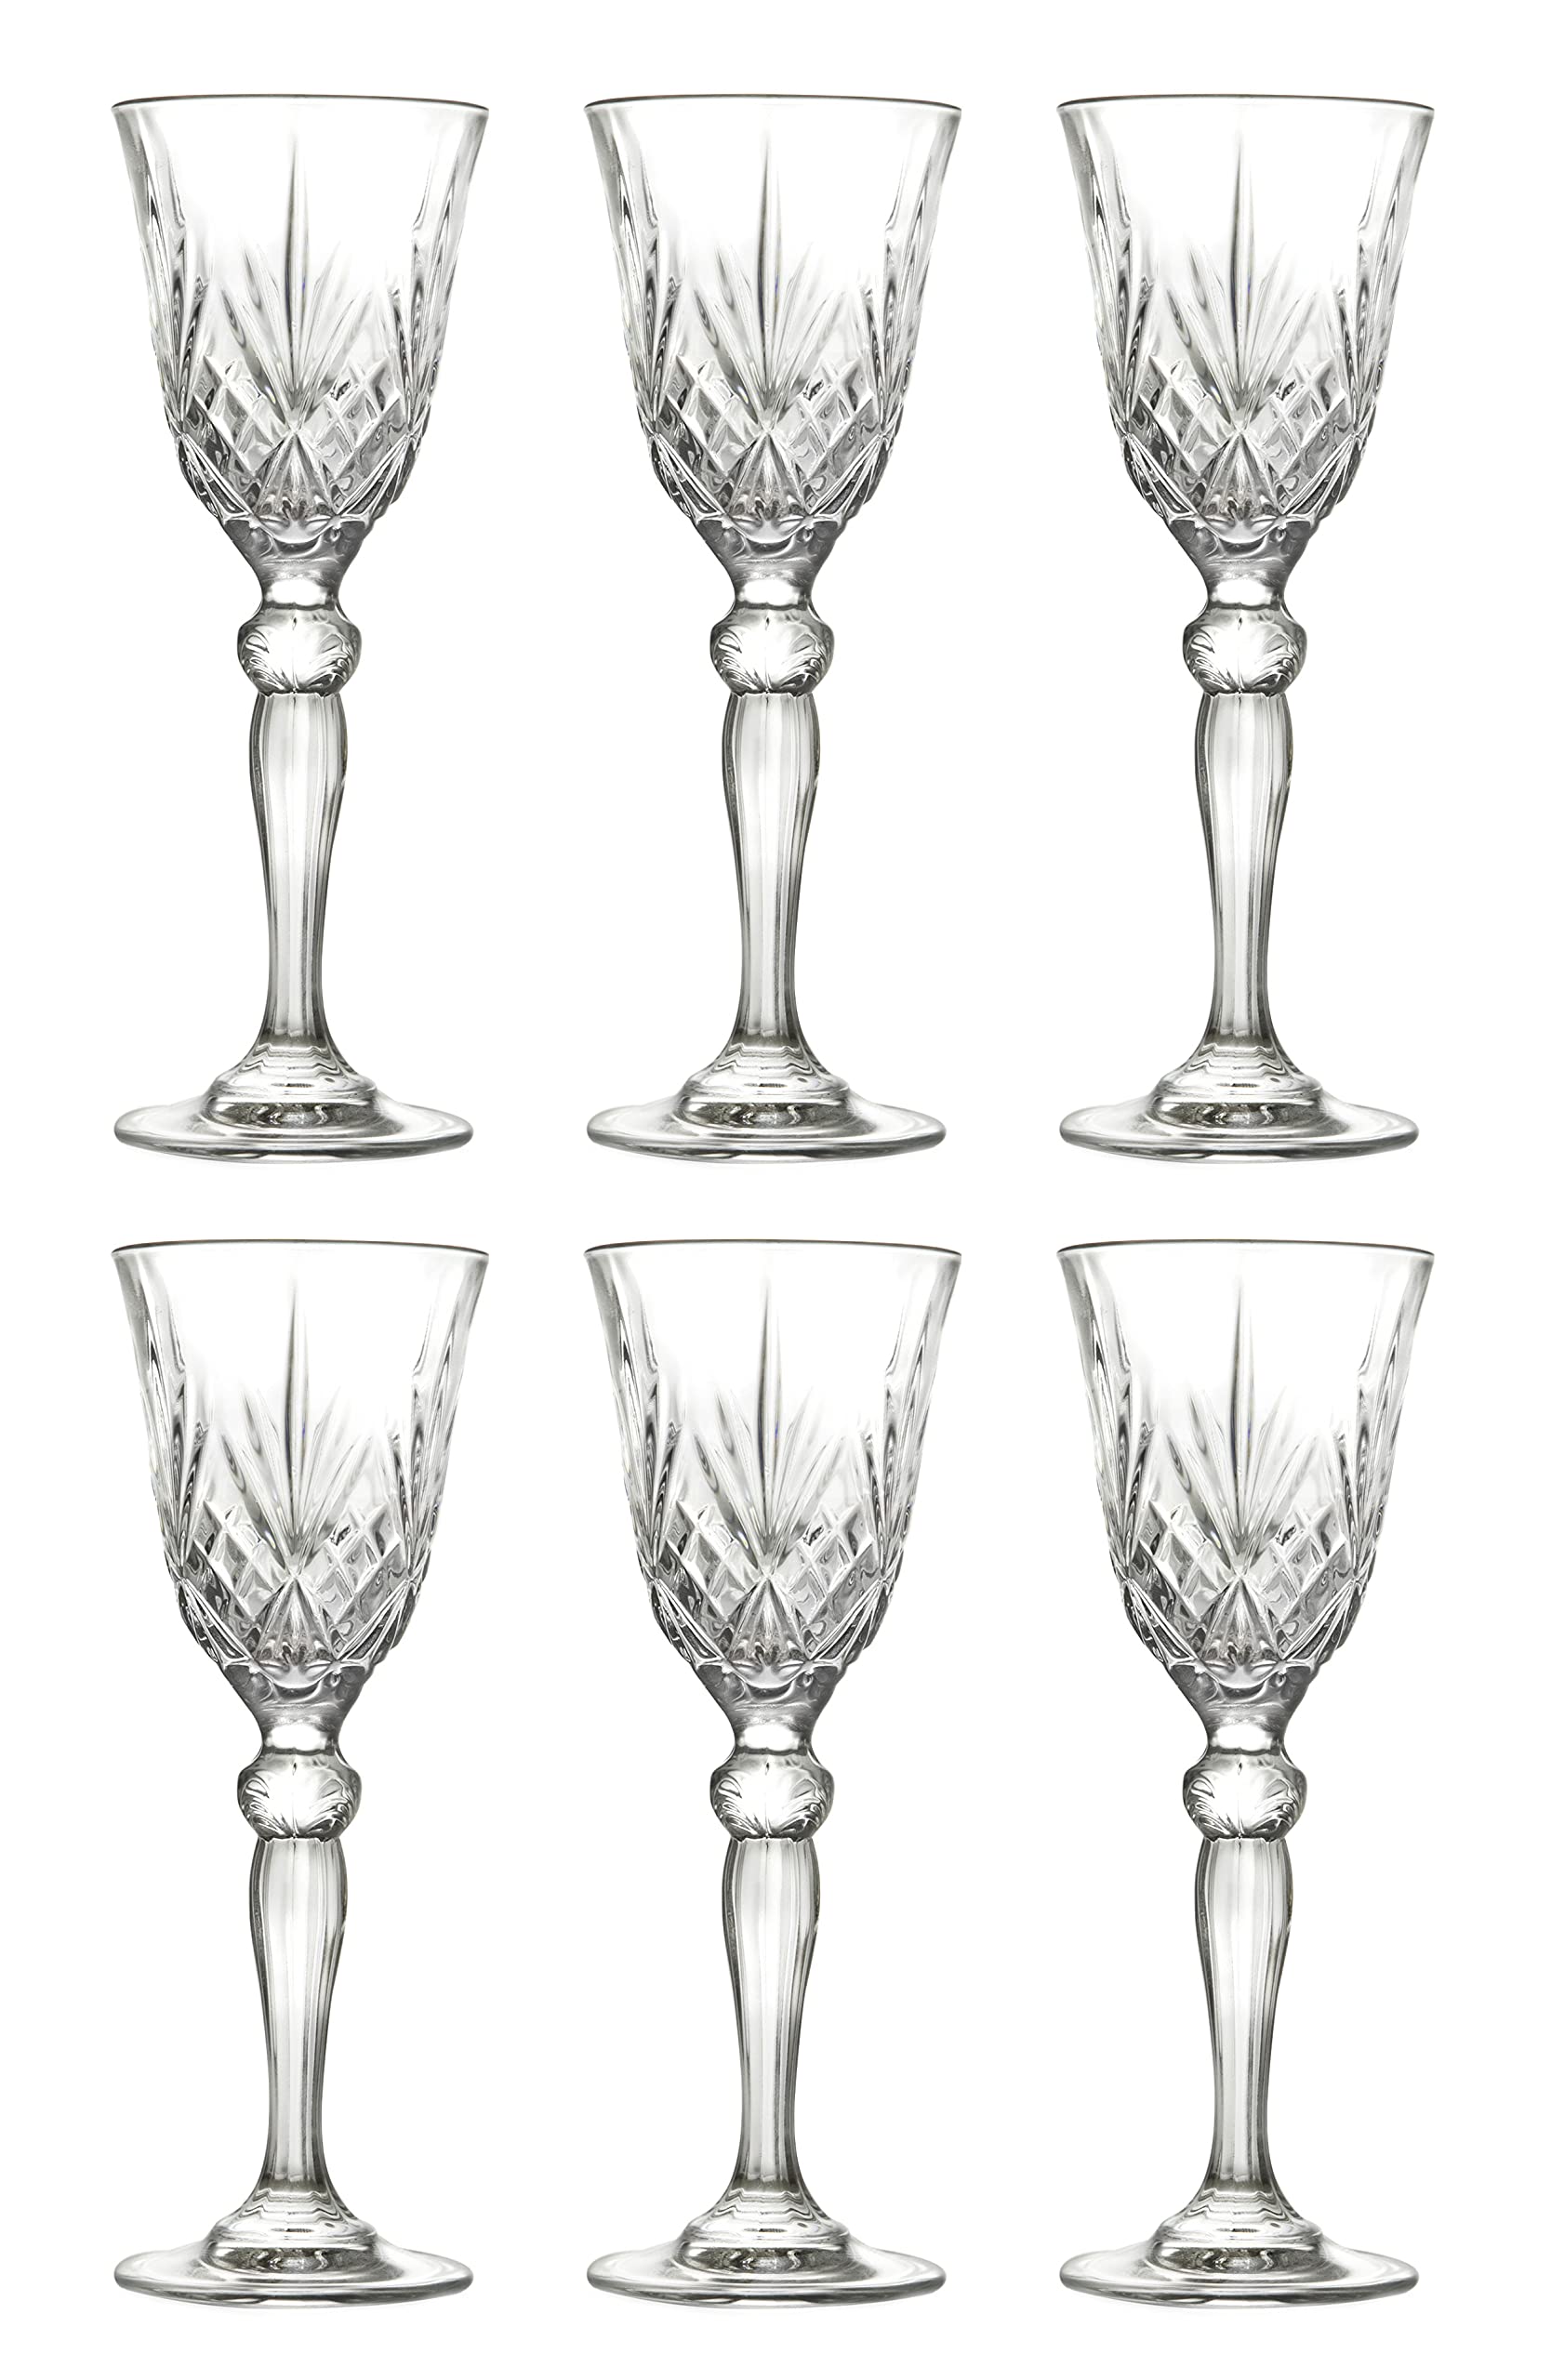 Barski Liquor Glass - Stemmed Glasses - Set of 6 Glasses - Crystal Glass - Designed - Use it for - Sherry - Shot - Vodka - Liquor - Cordial - Each Glass is 1.75 oz Made in Europe